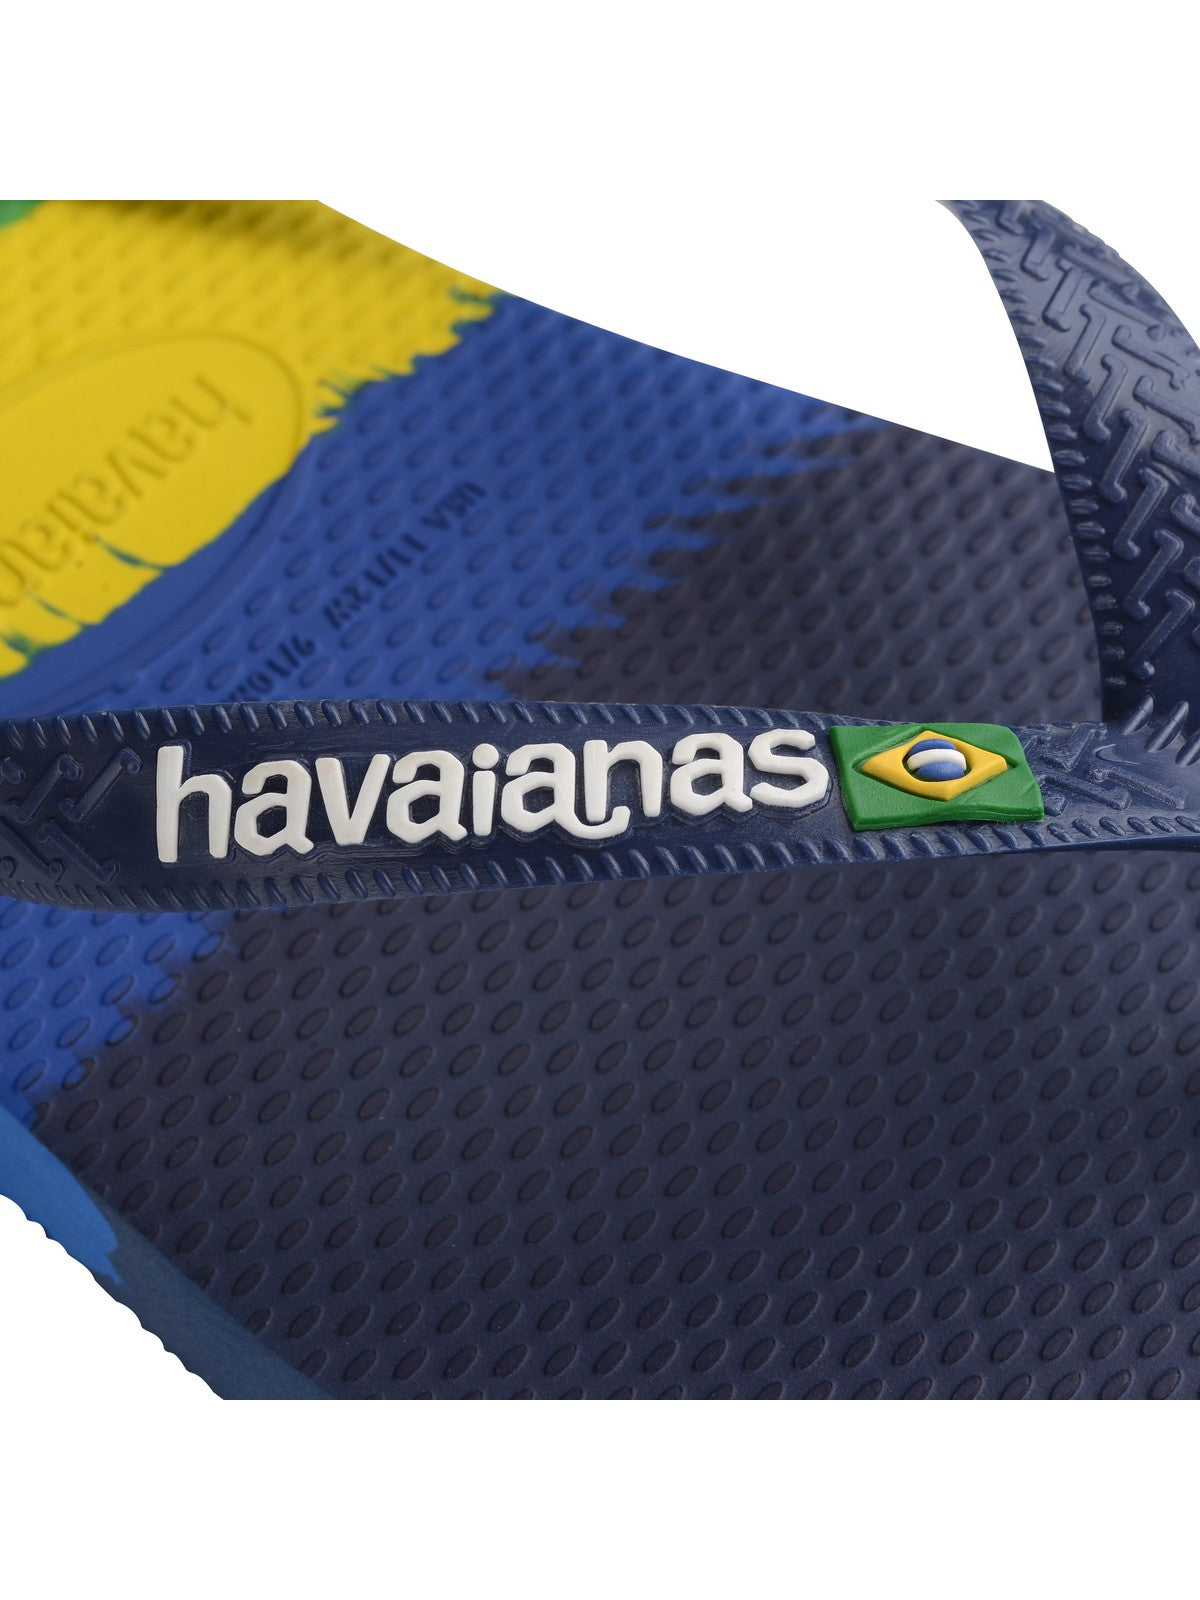 HAVAIANAS Infradito Unisex adulto Hav. Brasil Tech 4147239.0555 Blu